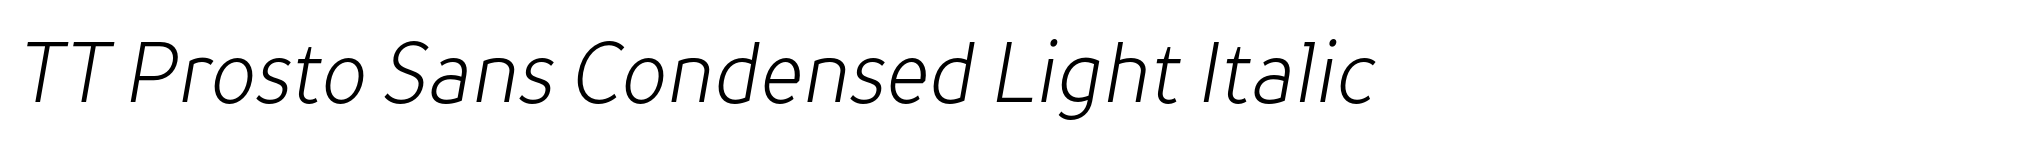 TT Prosto Sans Condensed Light Italic image